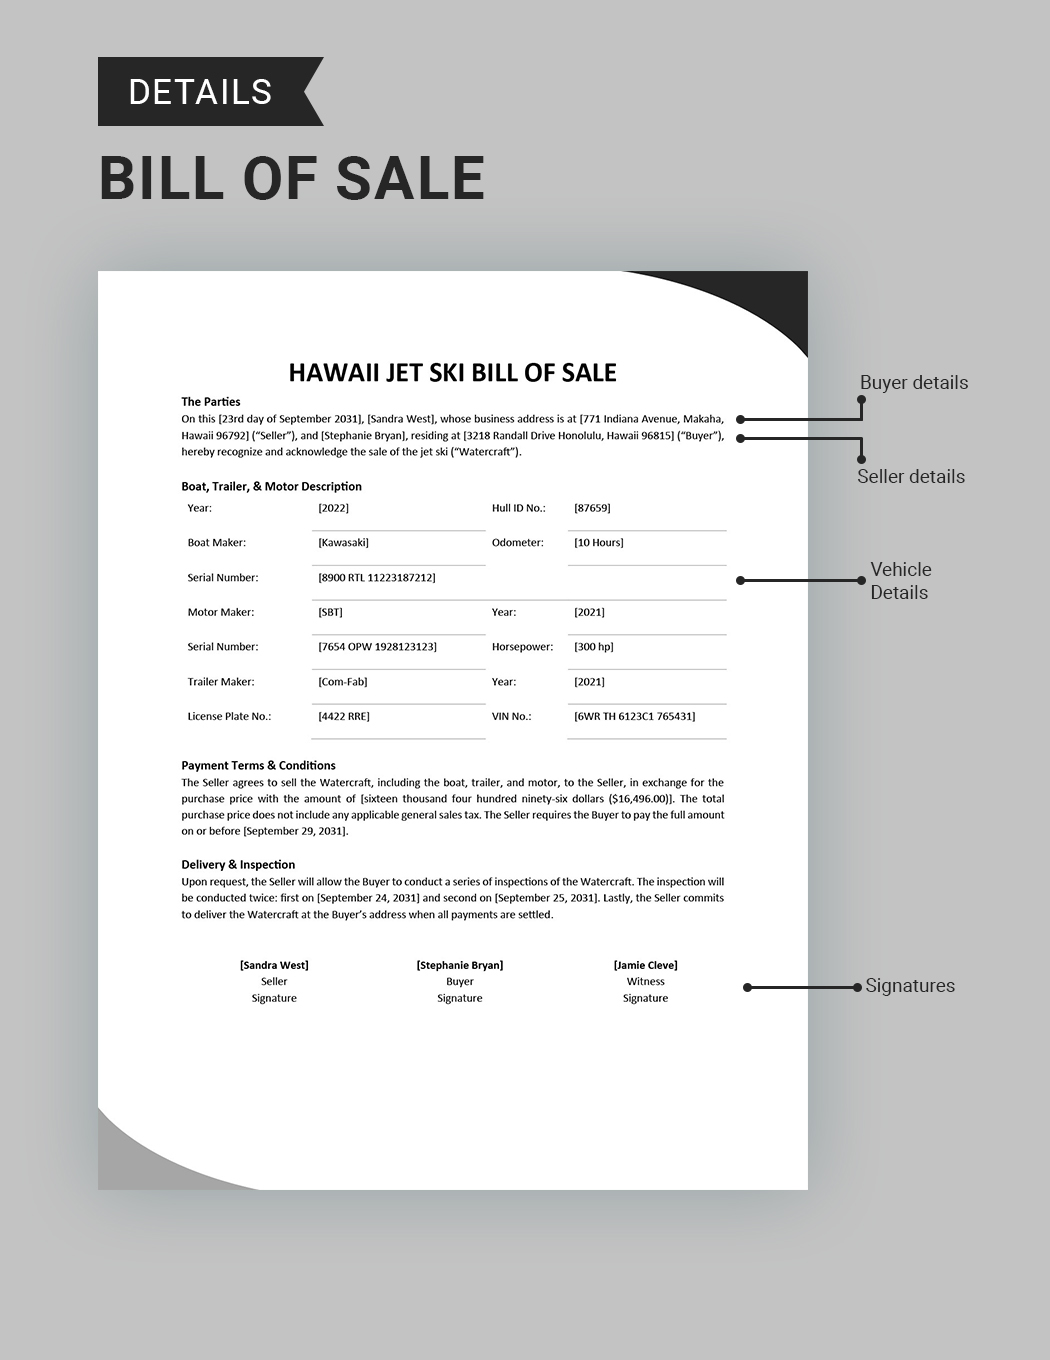 Hawaii Jet Ski Bill of Sale Template